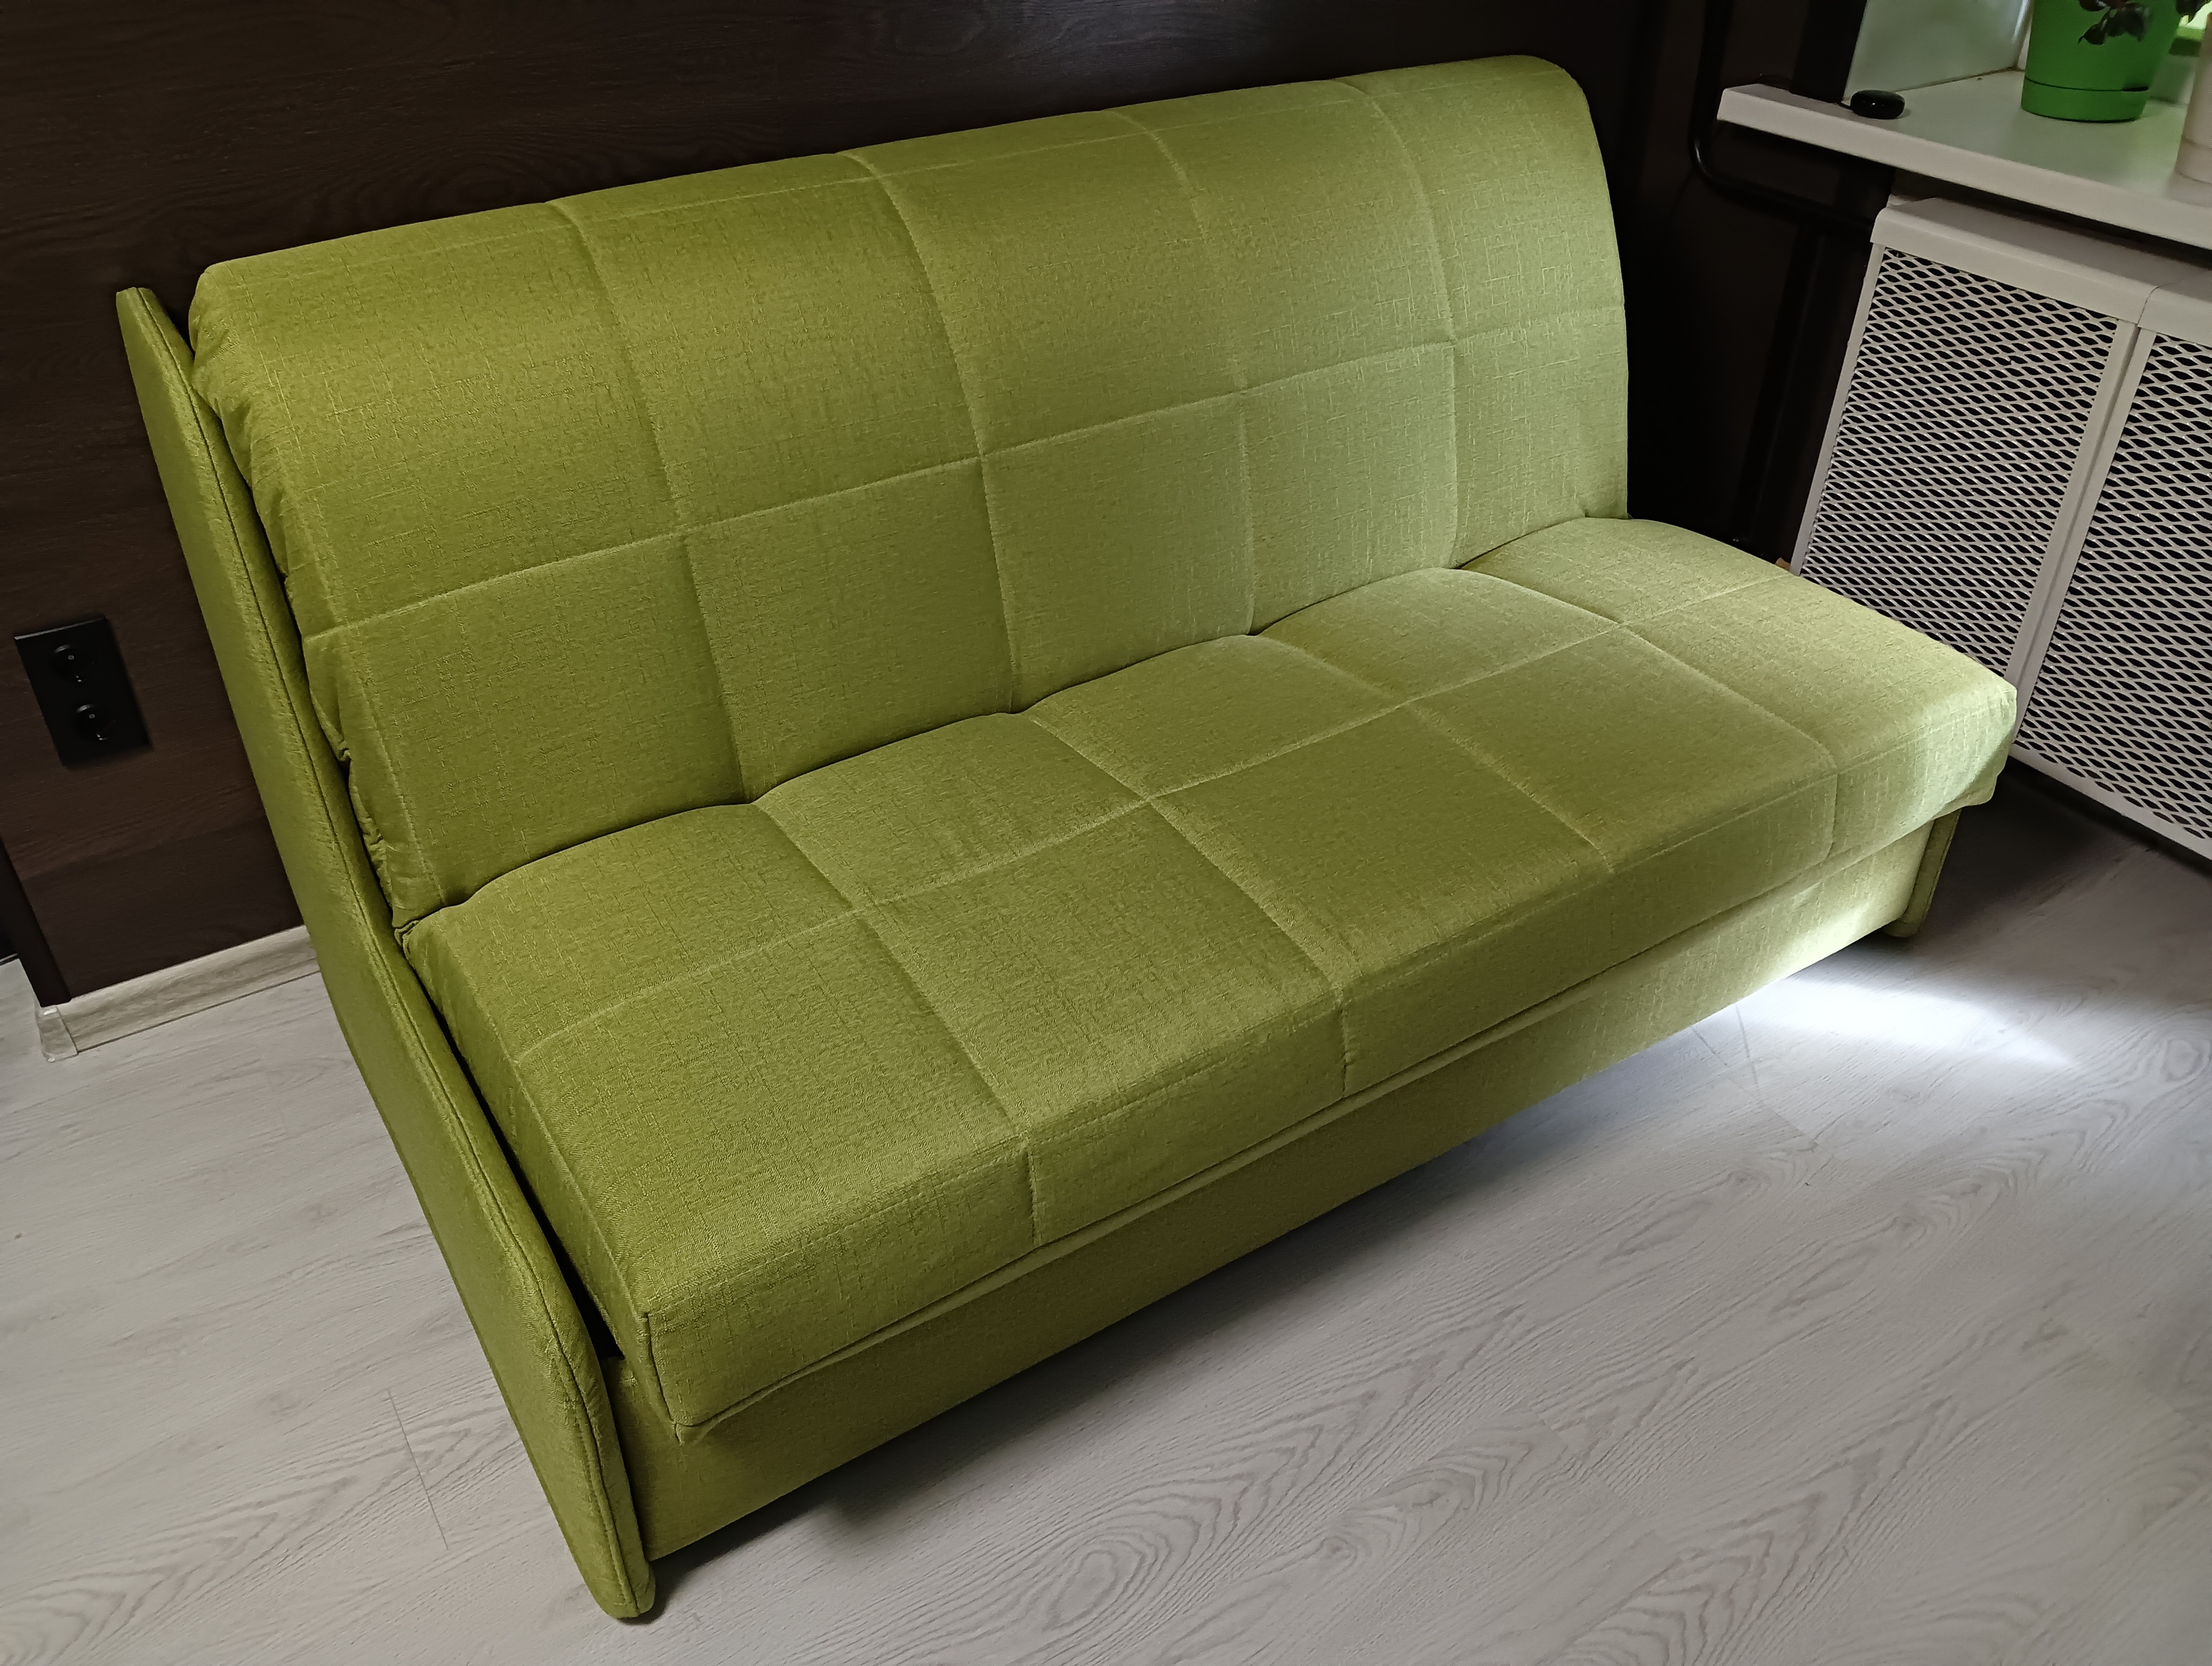 Диван Софт-Модерн Шерлок 980 – Купить диван за 25500.00 руб. отпроизводителя